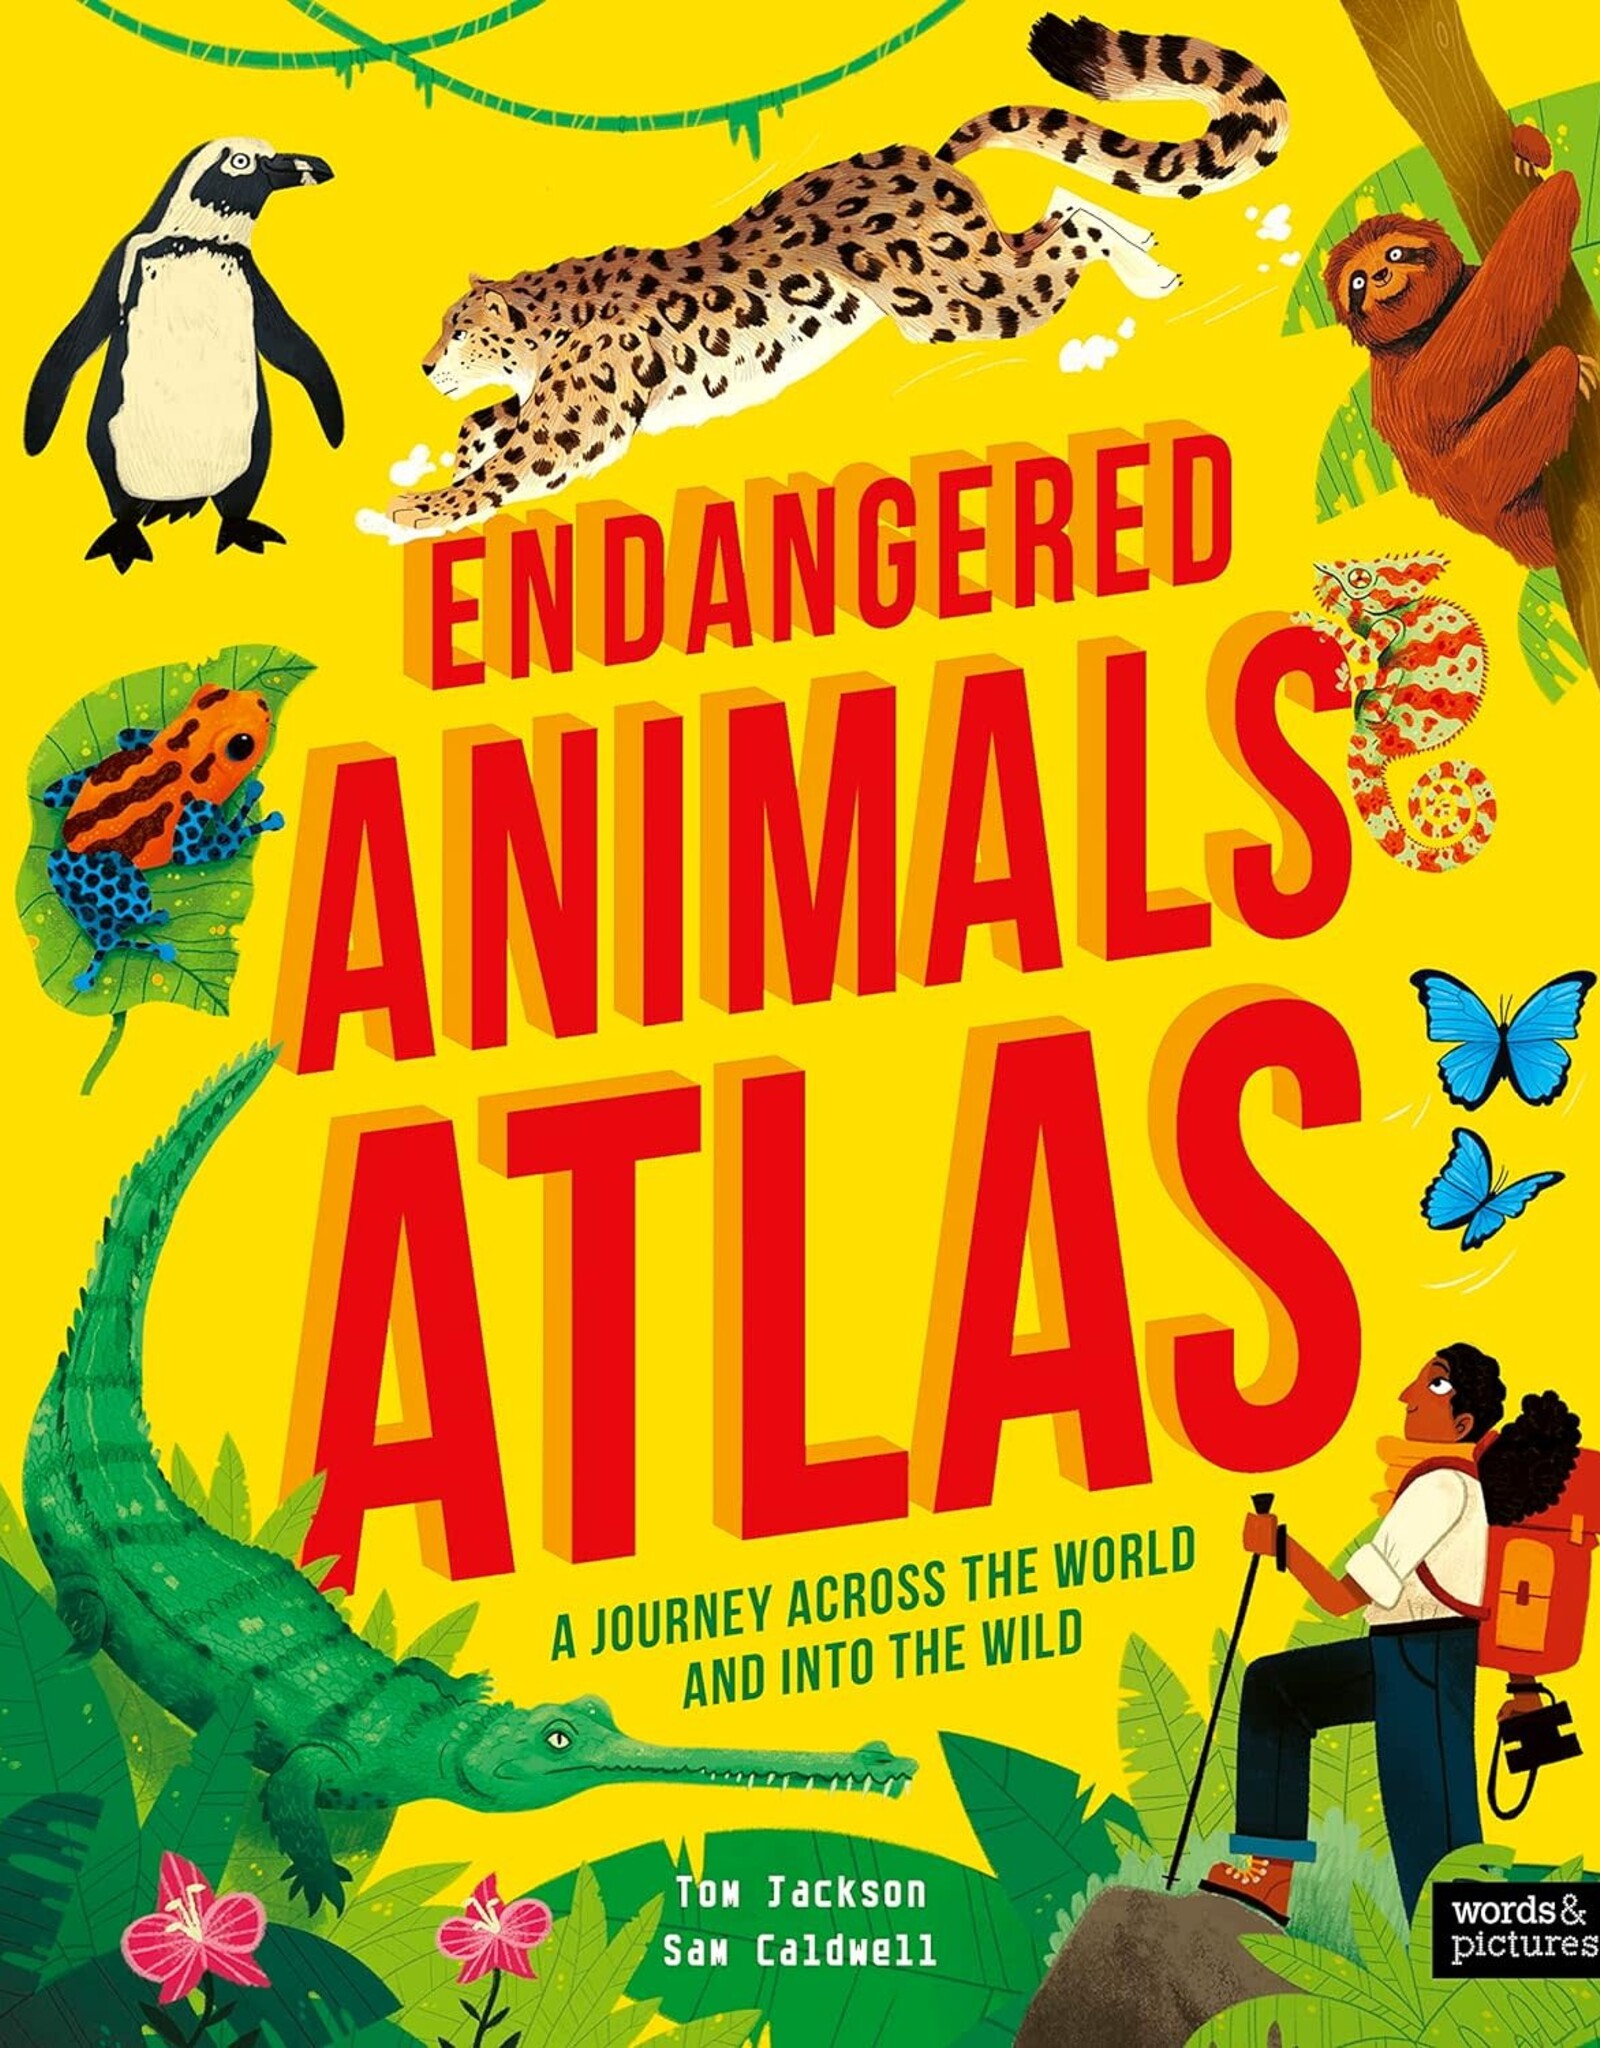 Quarto Endangered Animals Atlas